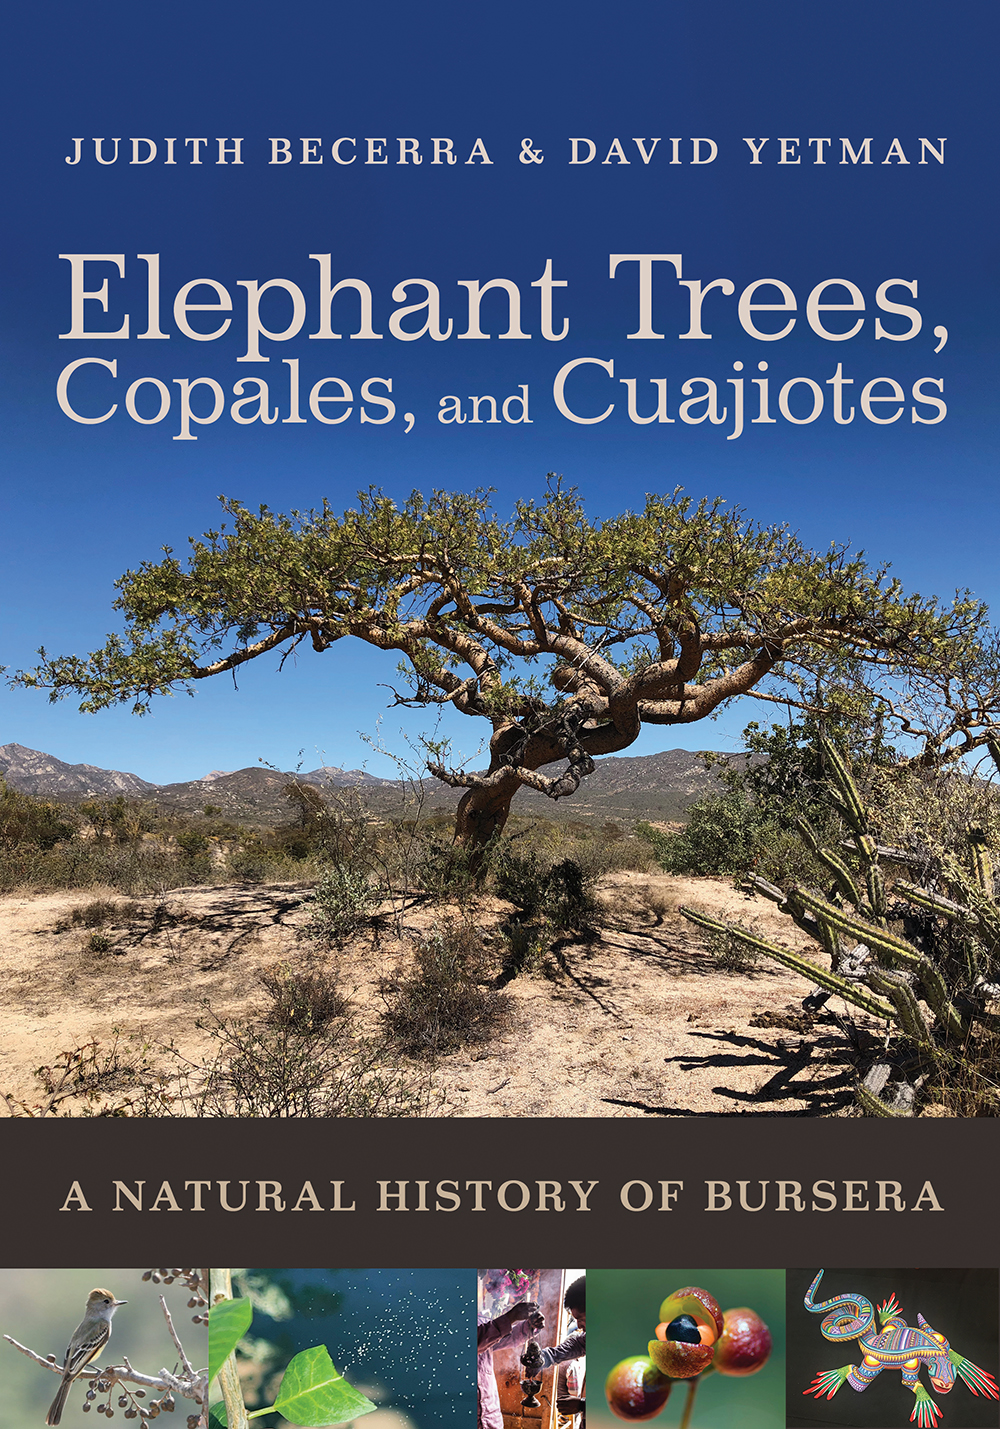 Elephant Trees, Copales, and Cuajiotes